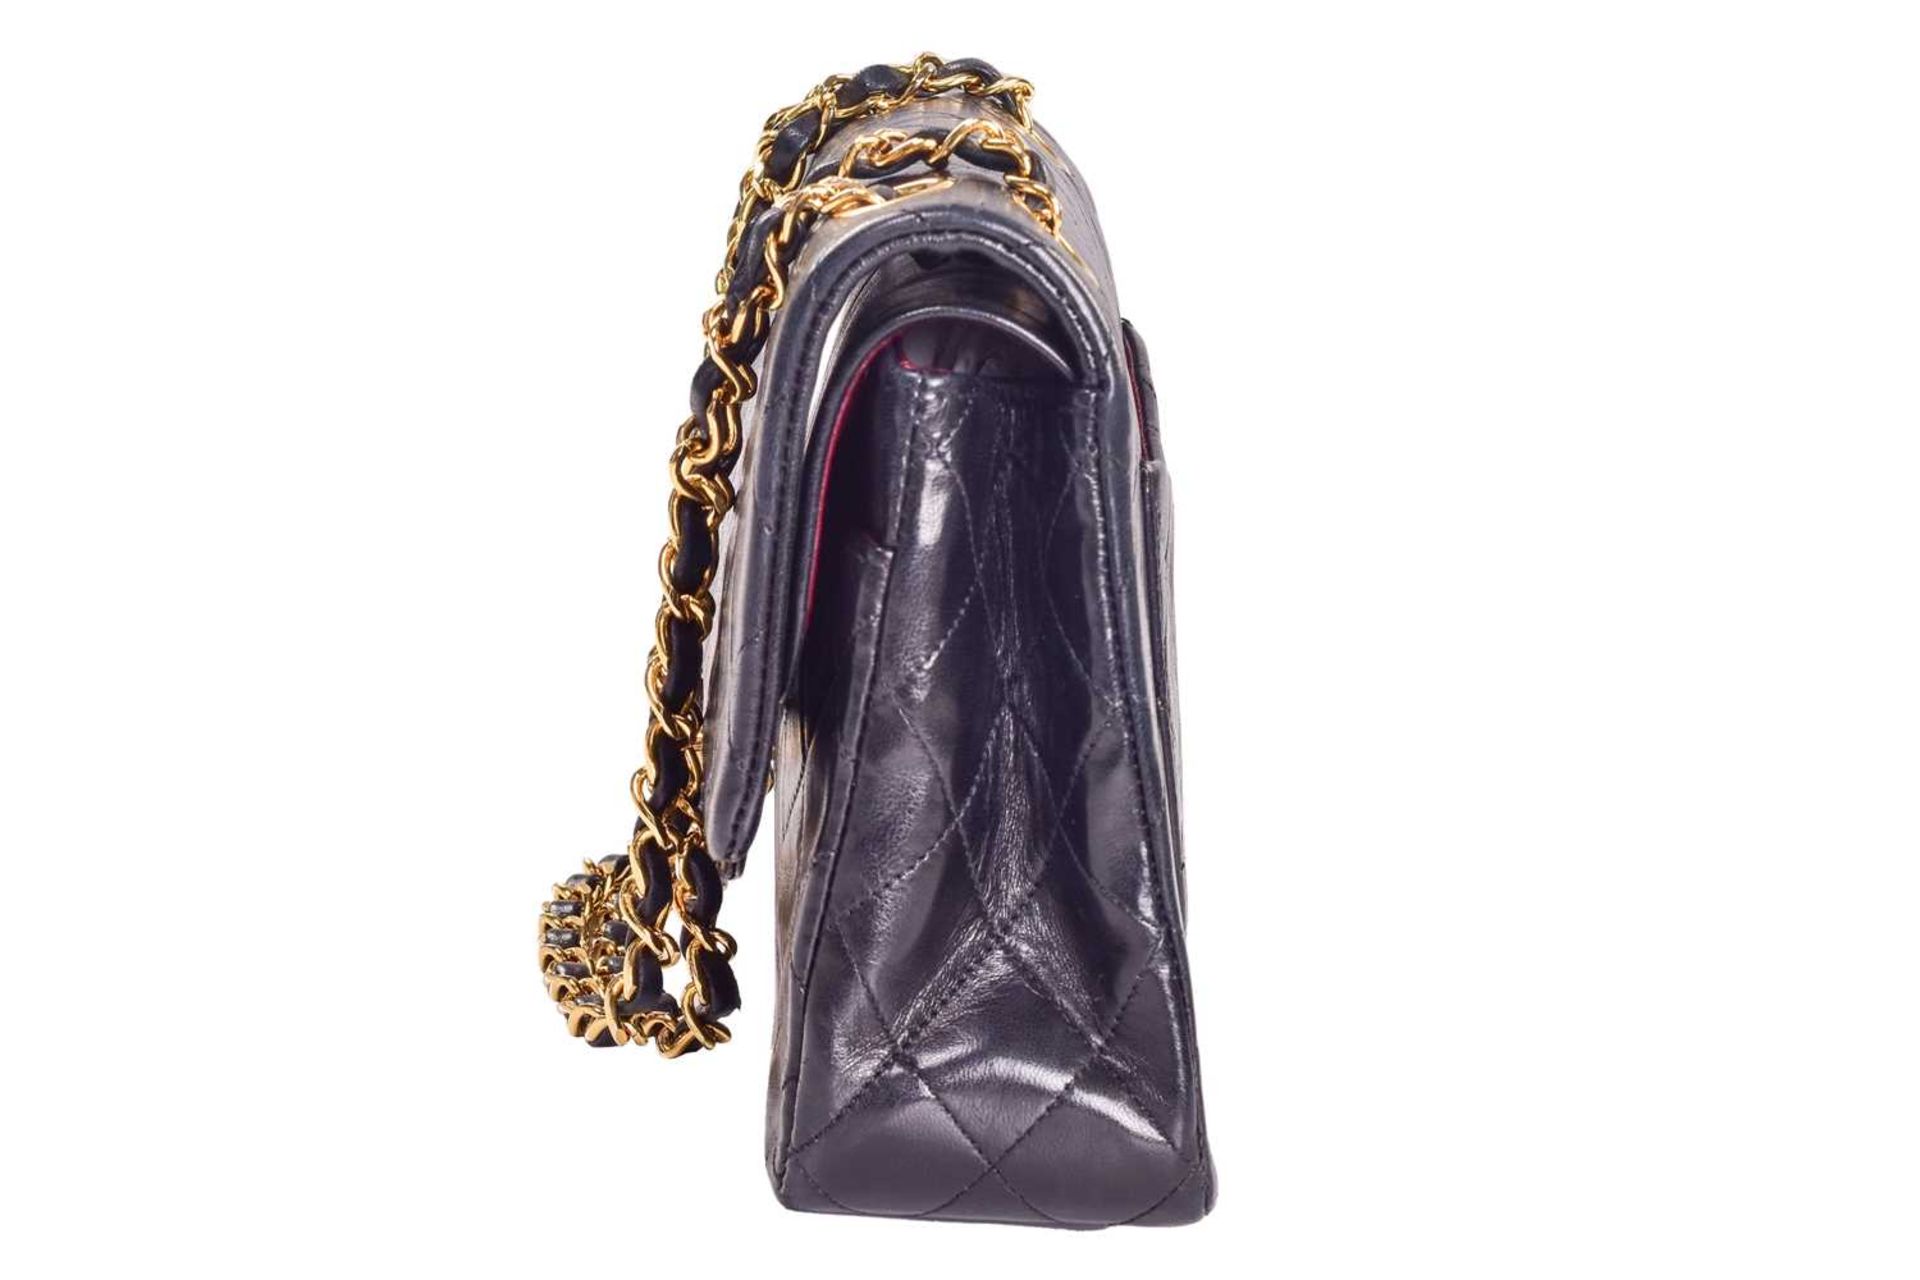 Chanel - a small double flap handbag in black lambskin, circa 1989, diamond-quilt rectangular body - Image 5 of 11